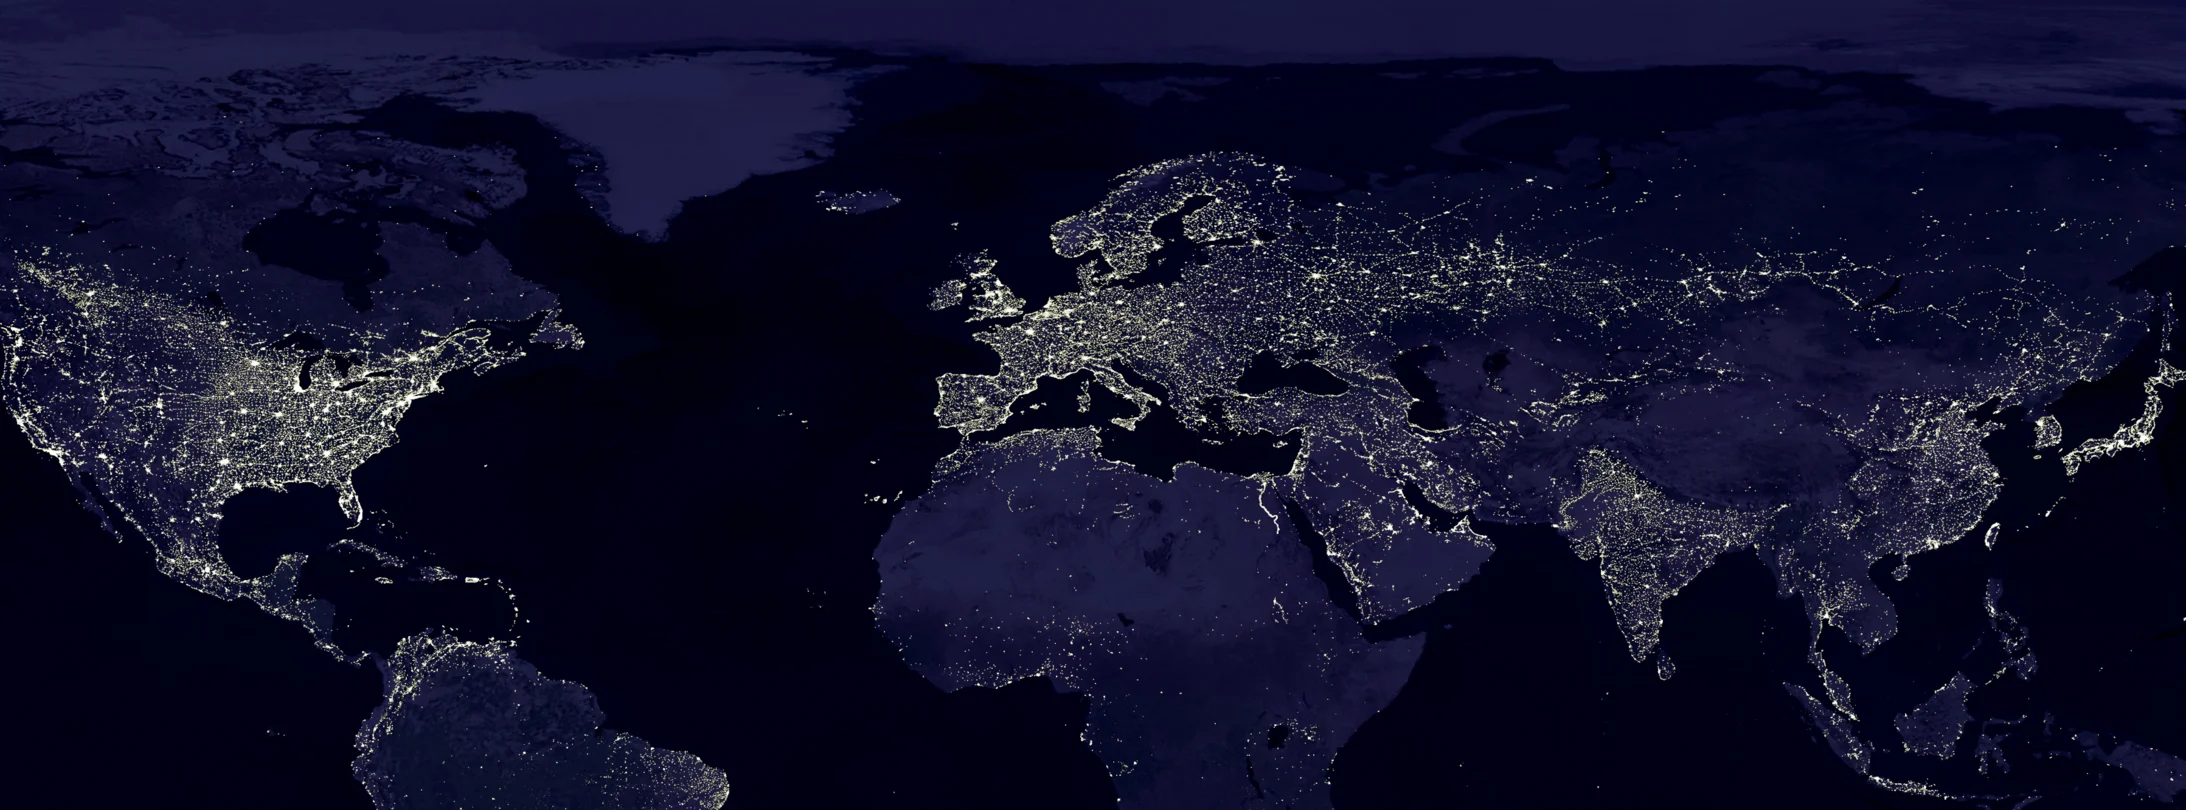 Europe by night